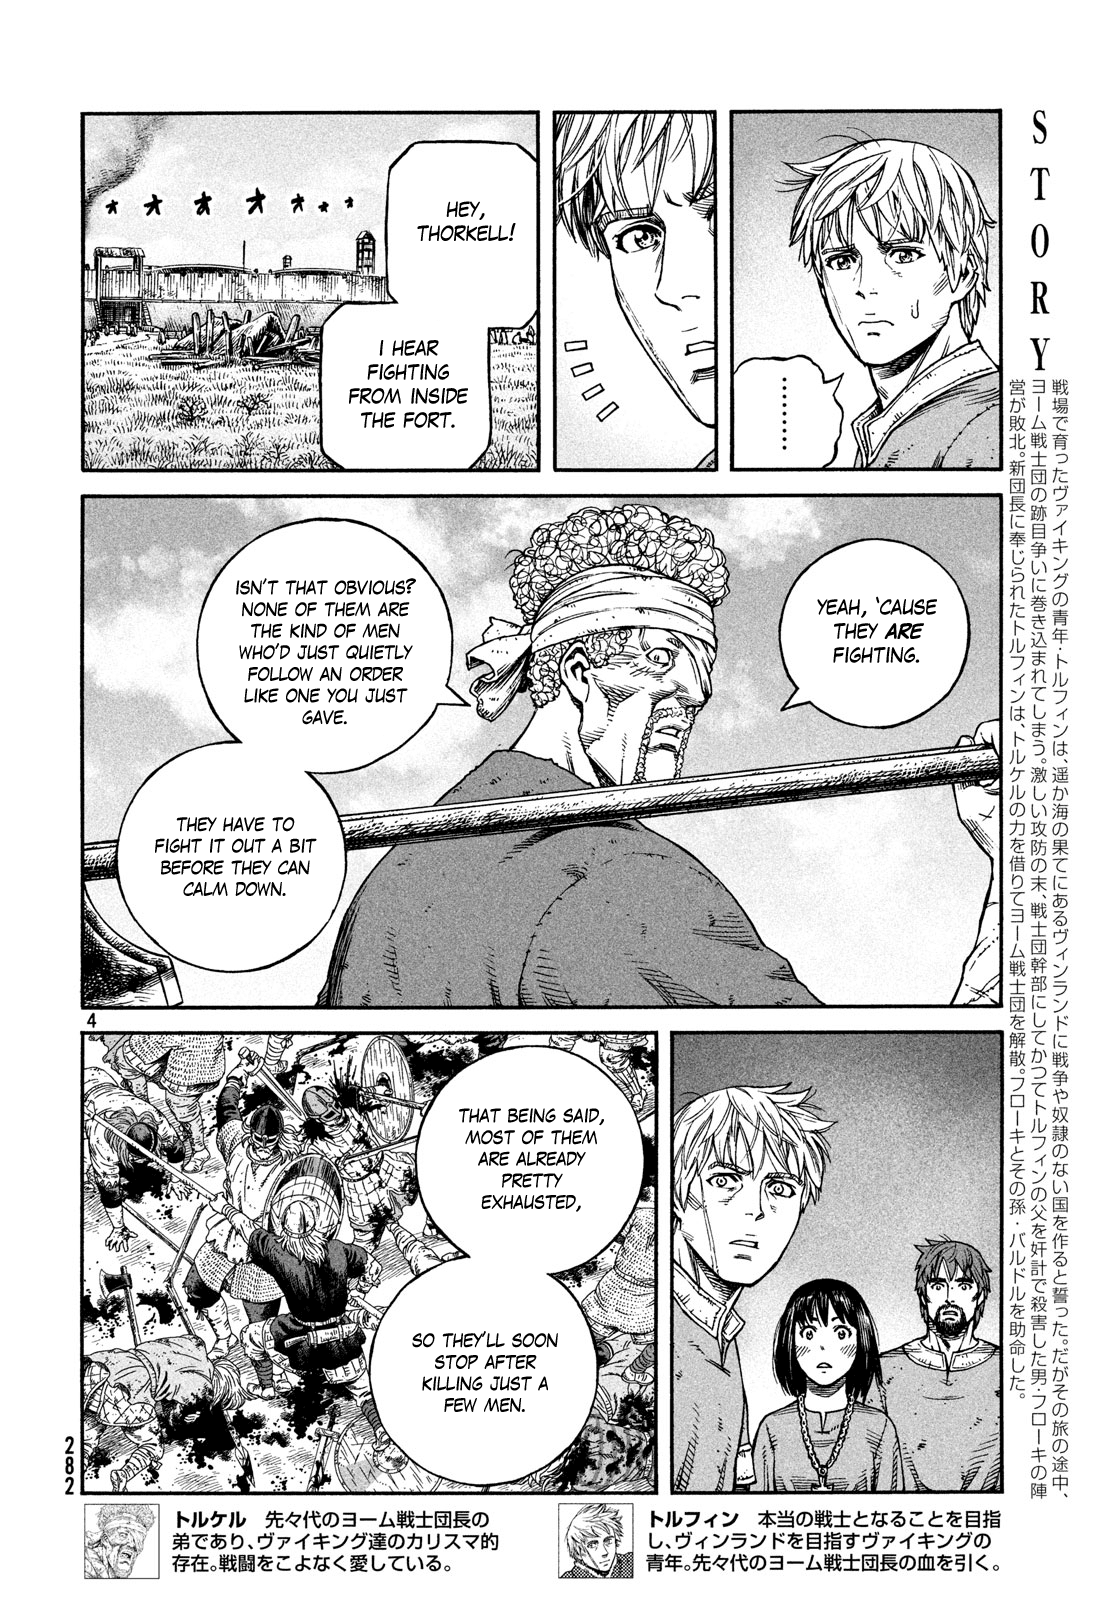 Vinland Saga Manga Manga Chapter - 160 - image 4